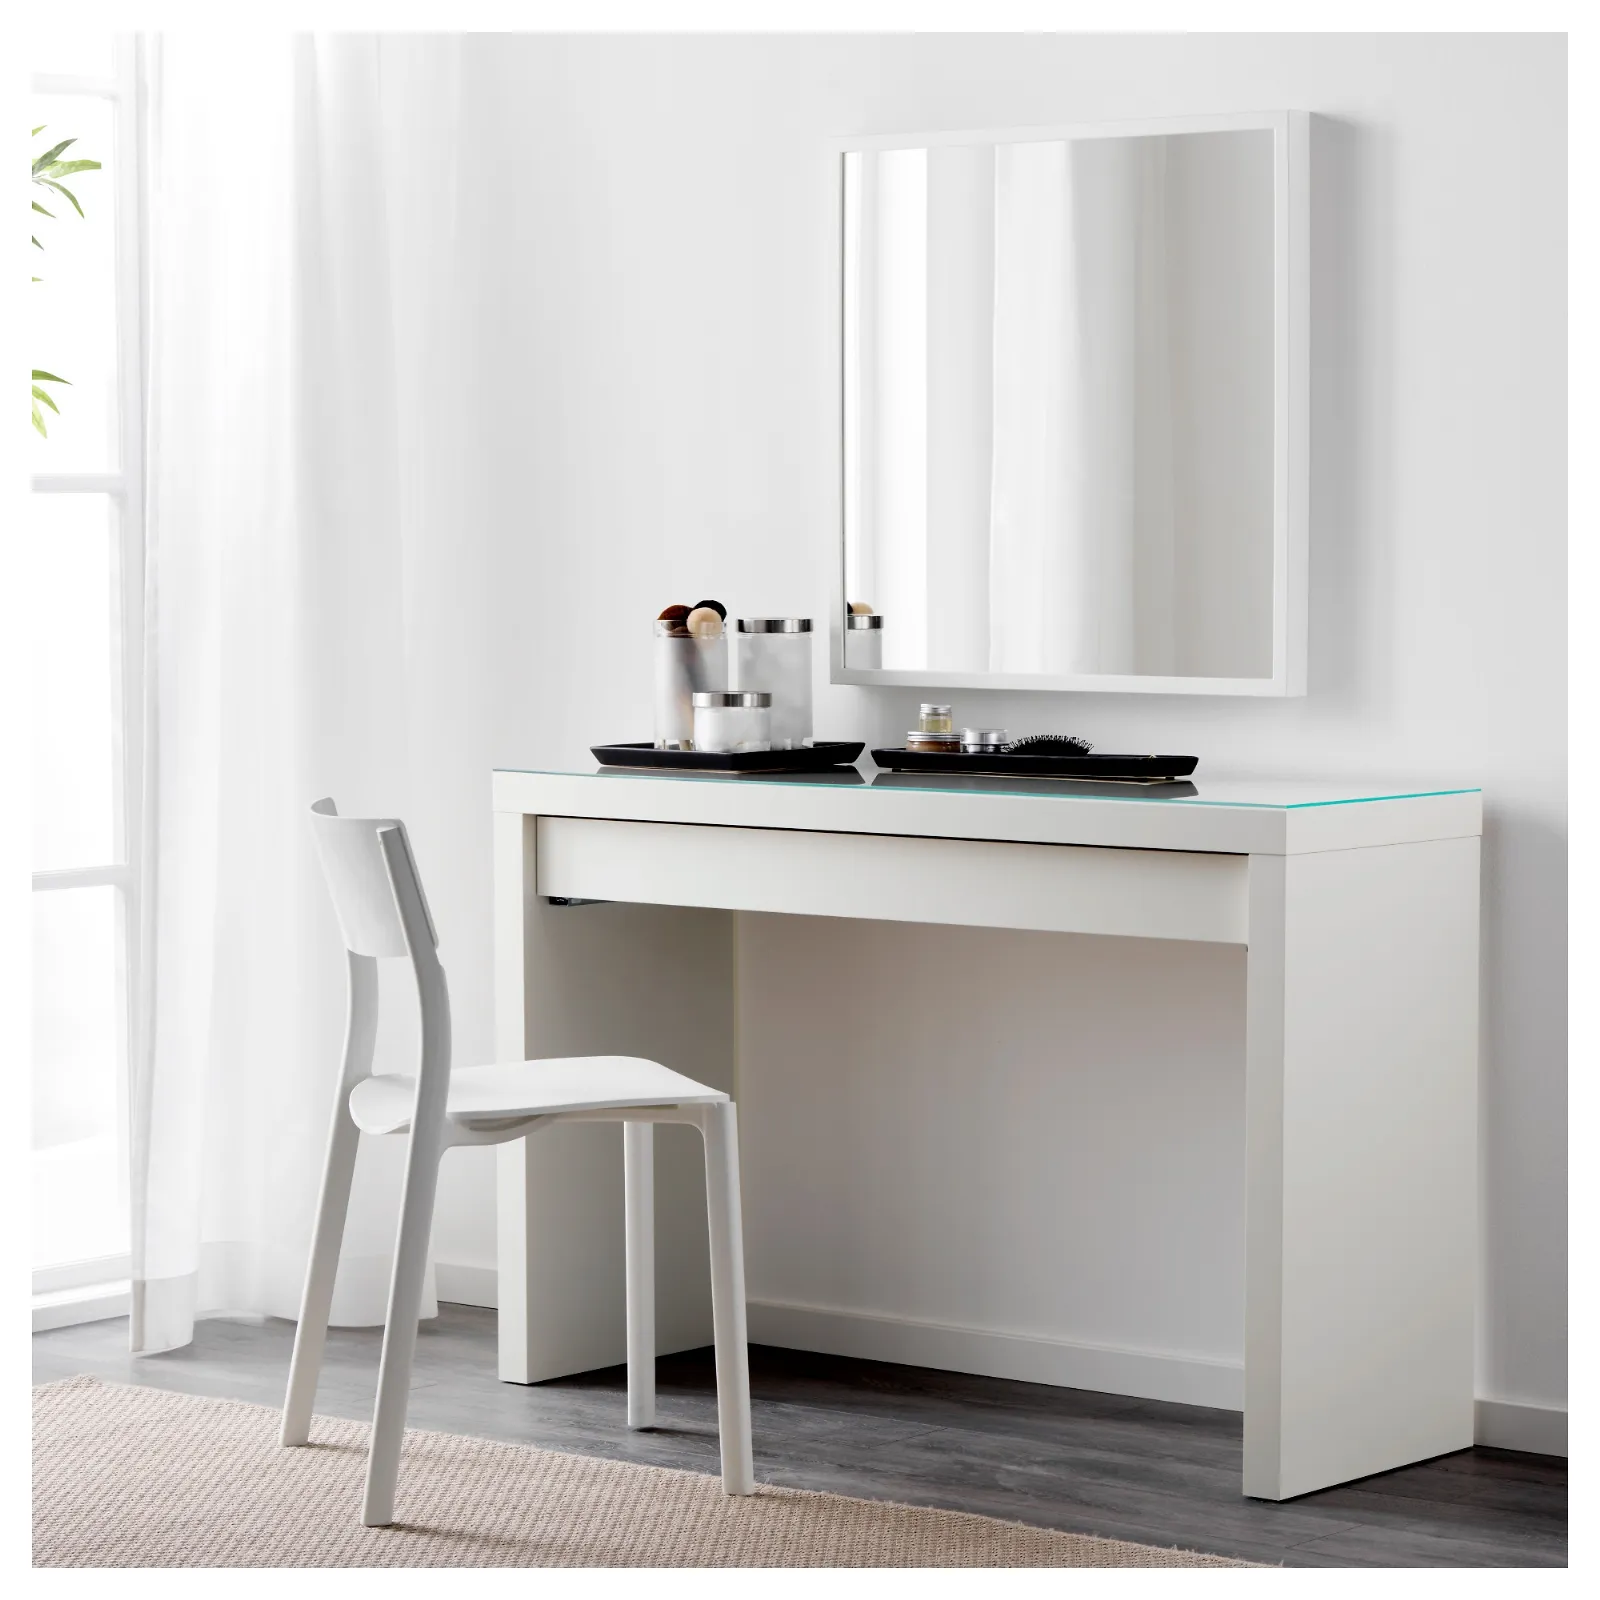 PANGET tavolo consolle, bianco, 106x42 cm - IKEA Svizzera